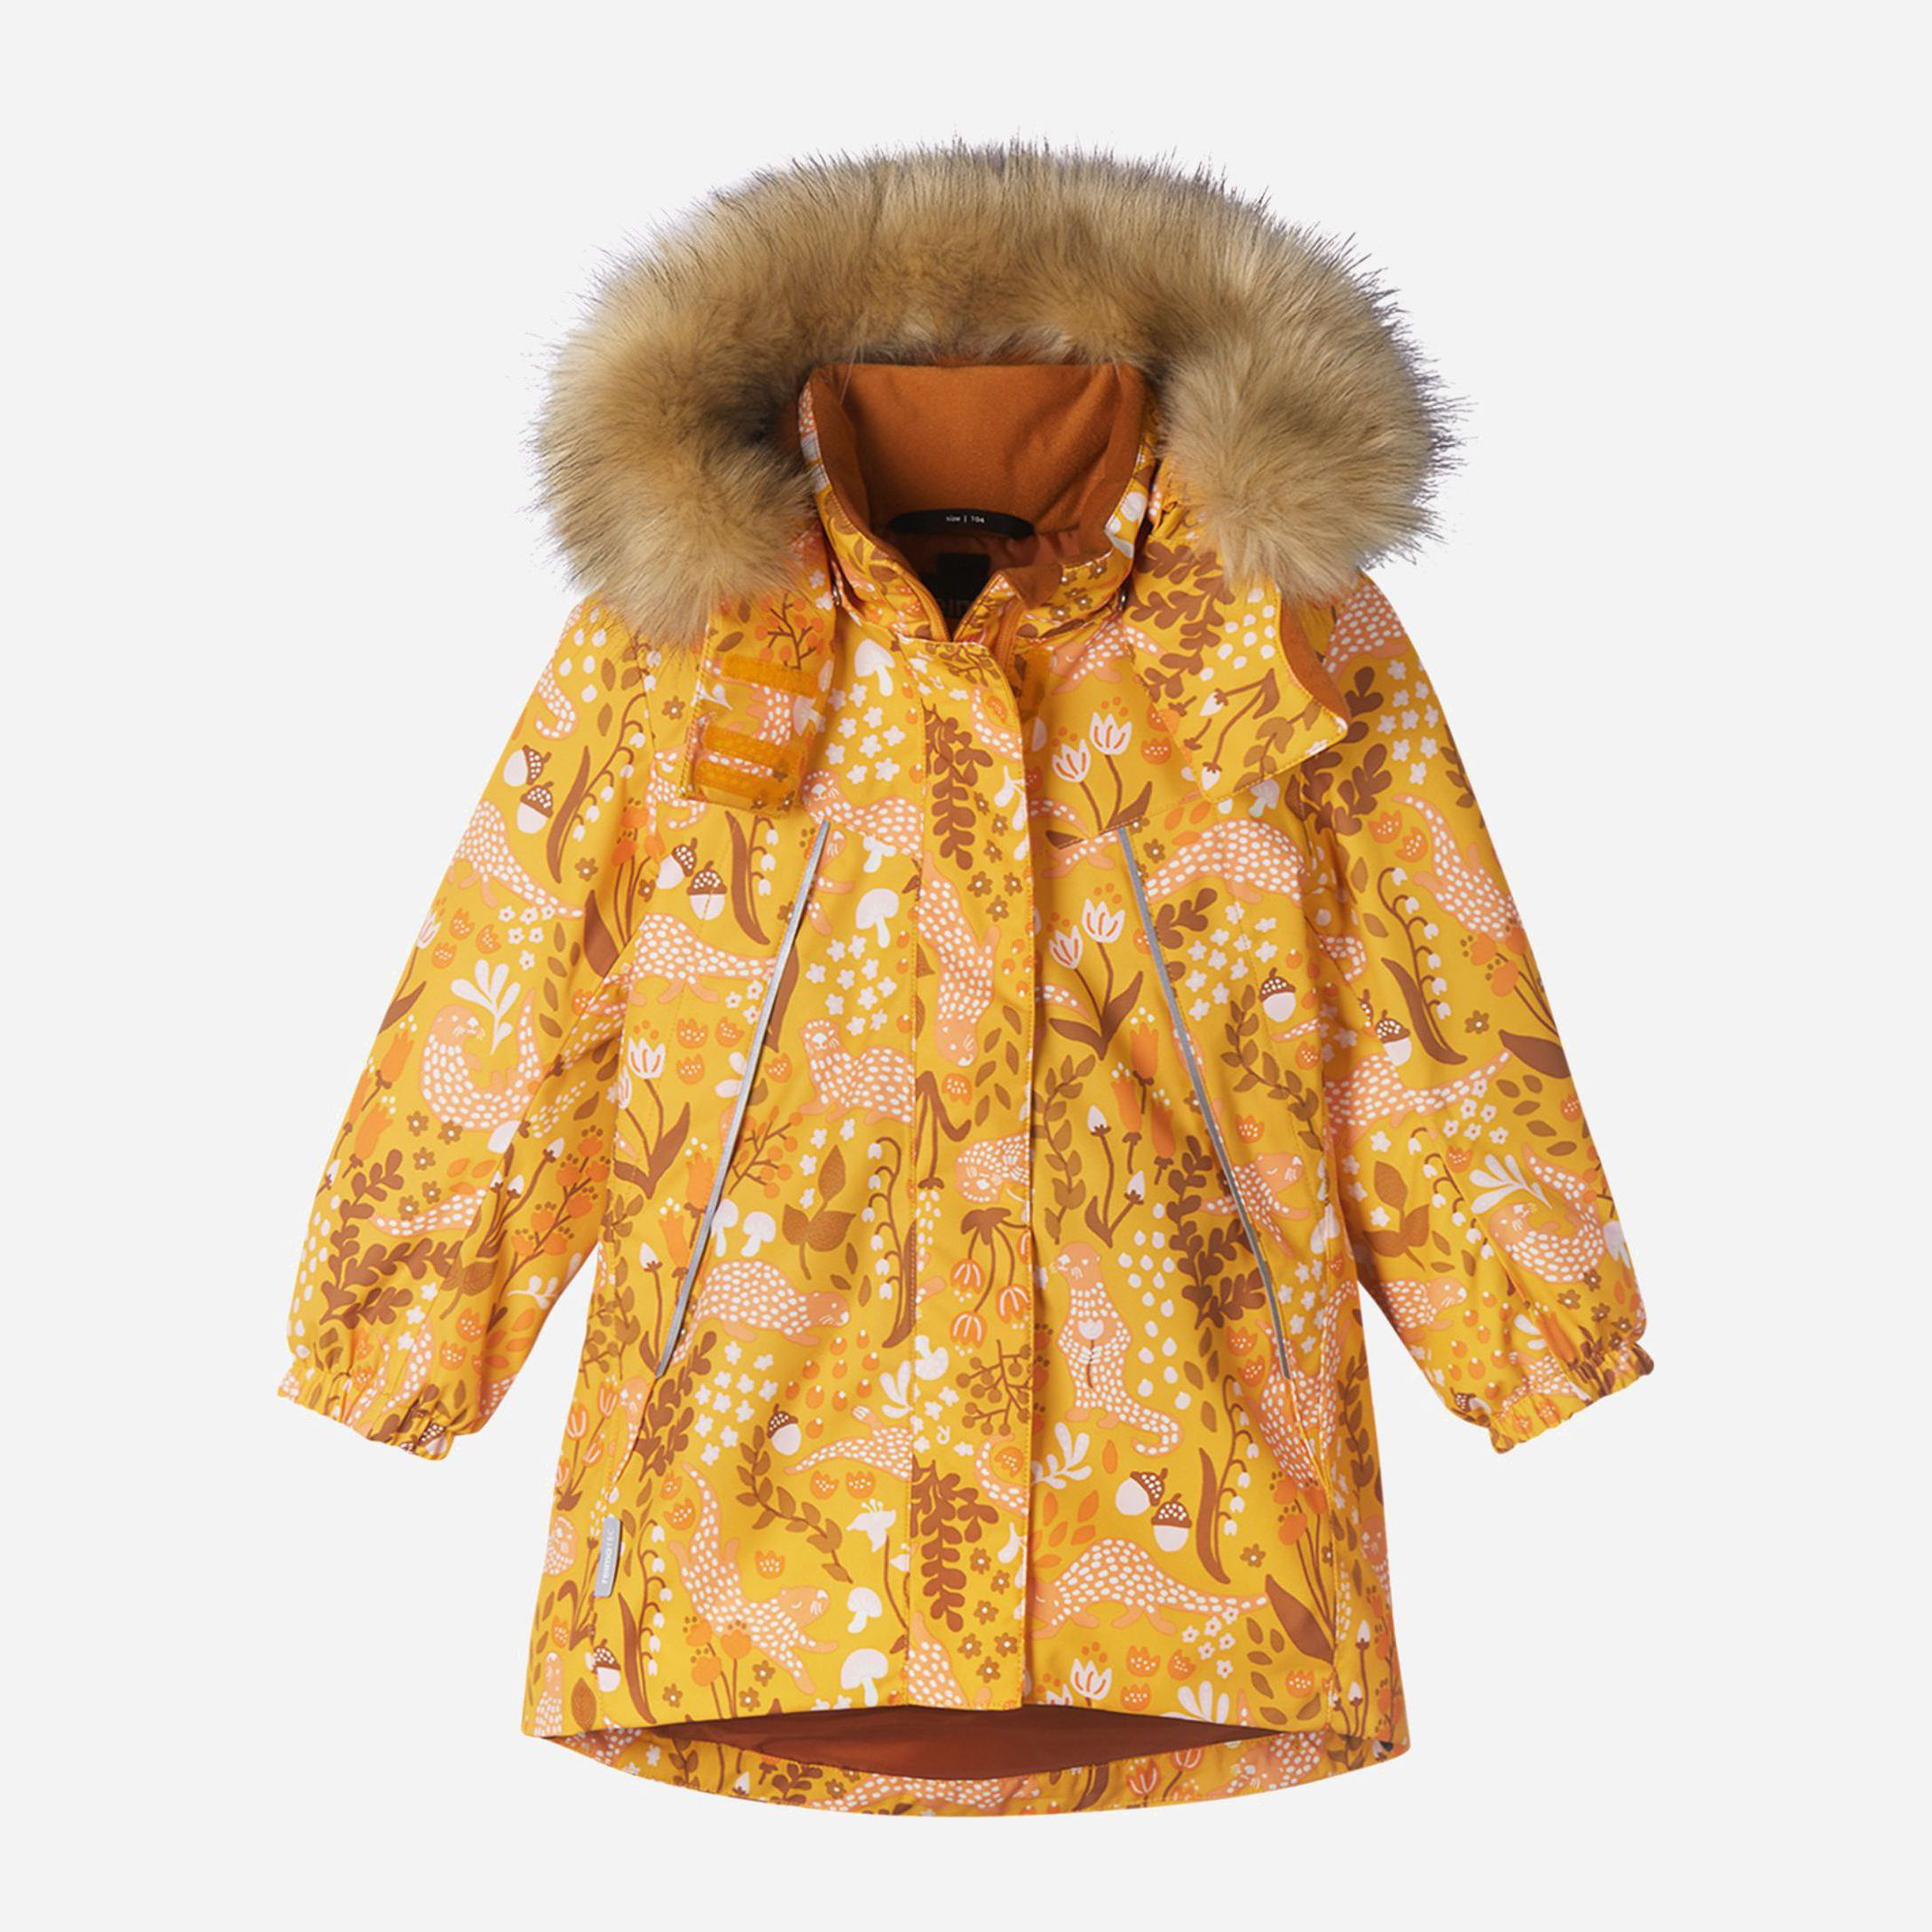 Акция на Дитяча зимова термо куртка для дівчинки Reima Muhvi 521642-2406 110 см от Rozetka